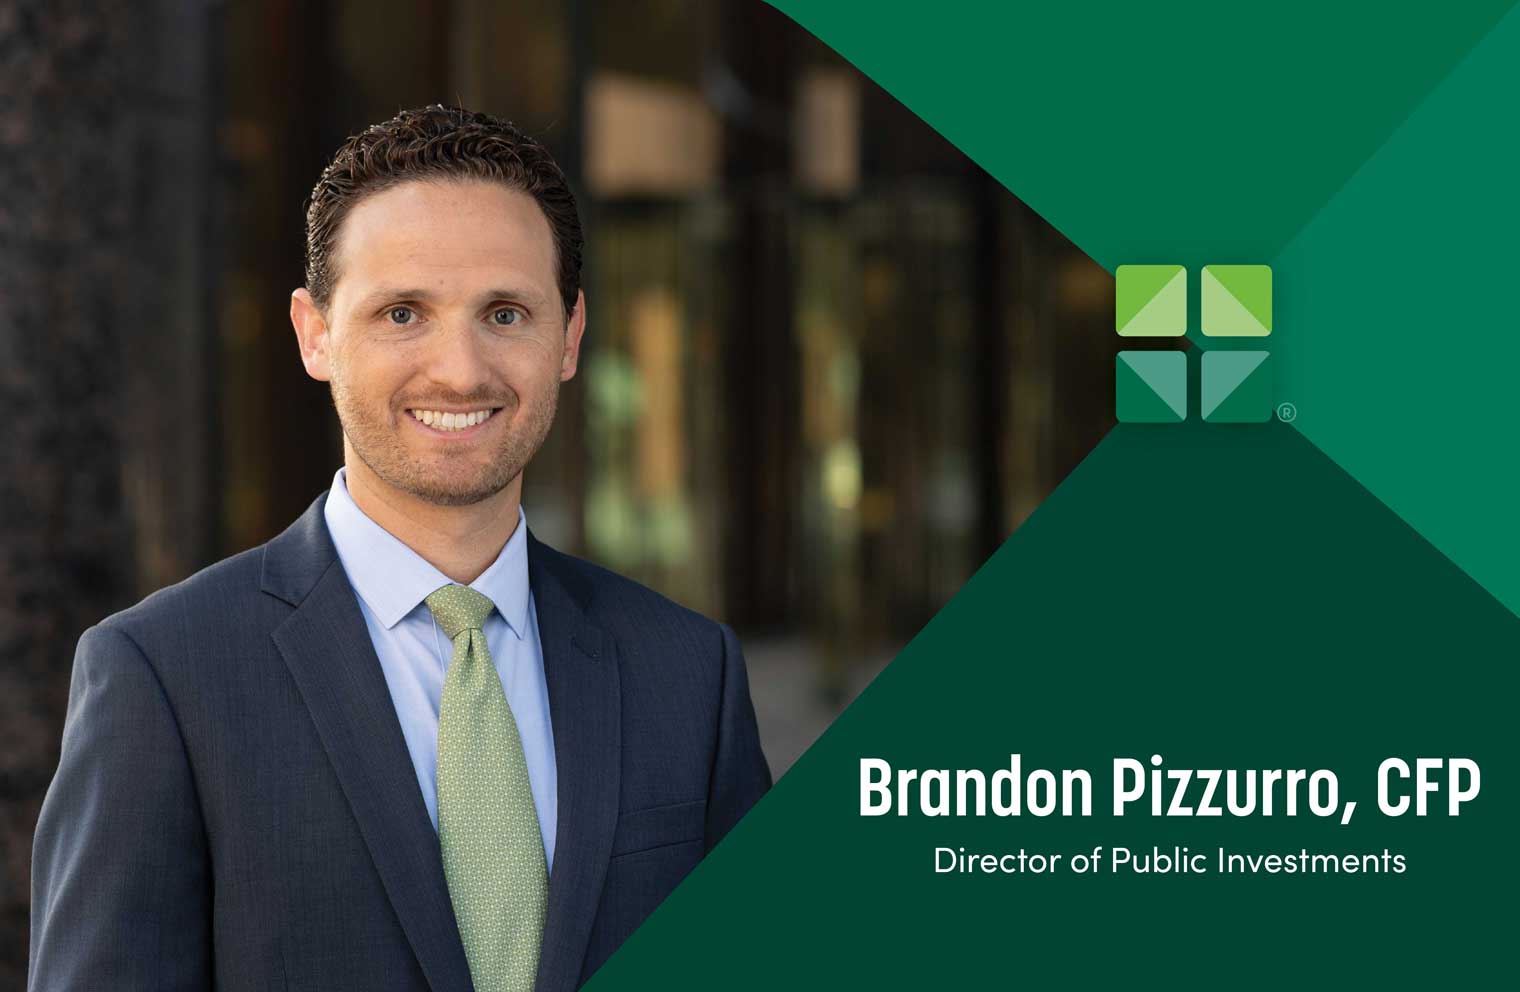 Brand Pizzurro, CFP. Director of Public Investments, GuideStone Capital Management